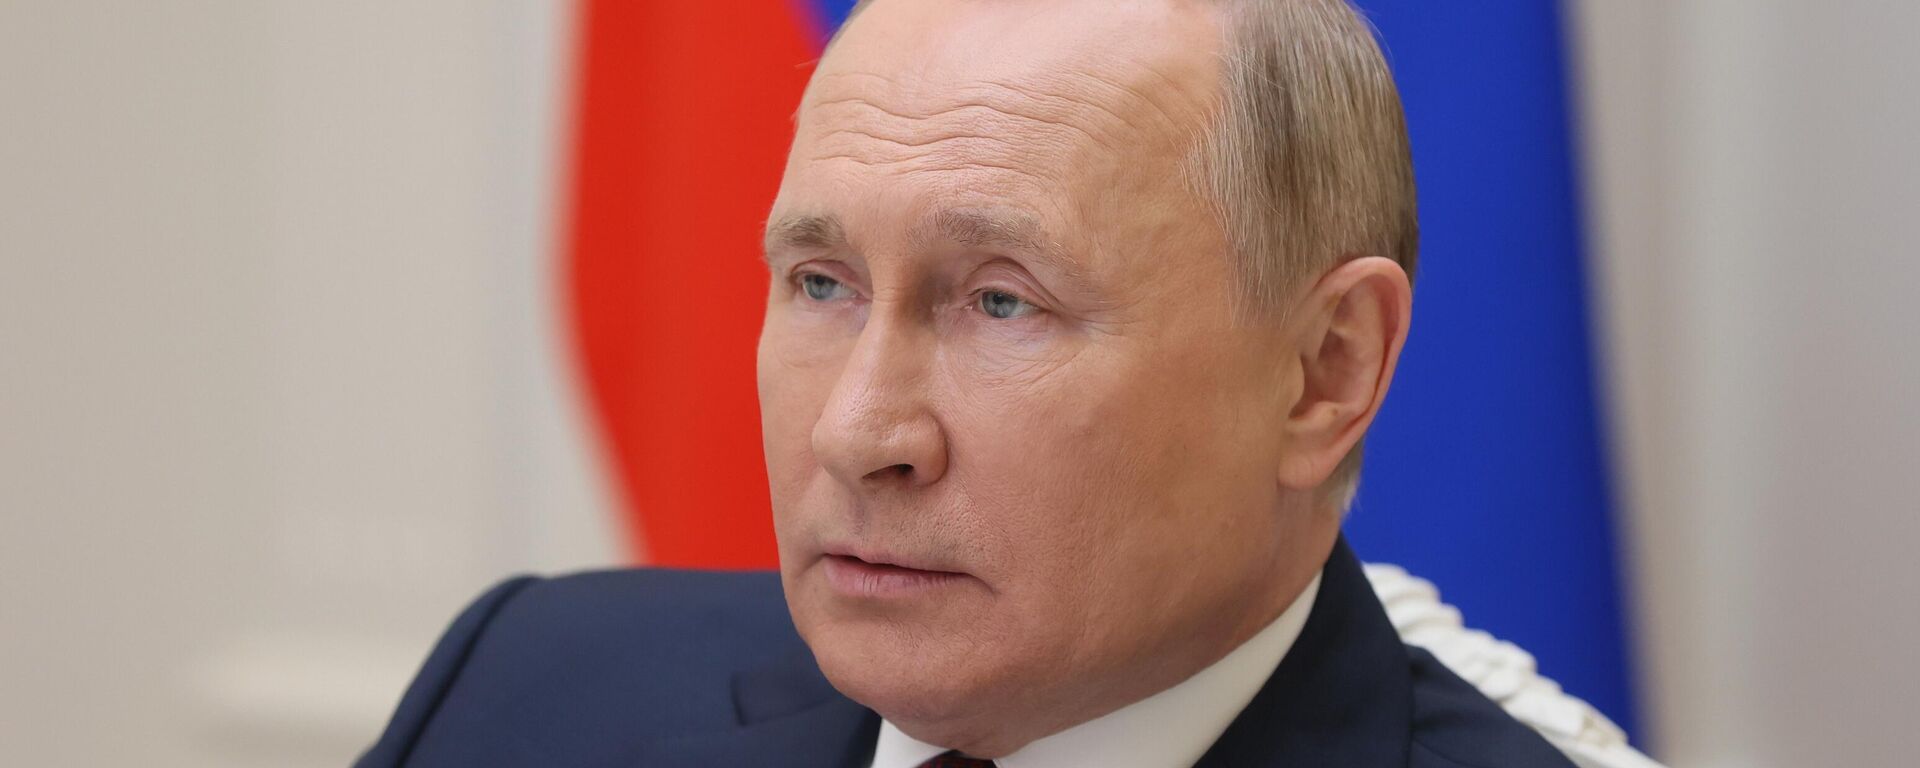 Vladímir Putin, presidente de Rusia - Sputnik Mundo, 1920, 21.12.2021